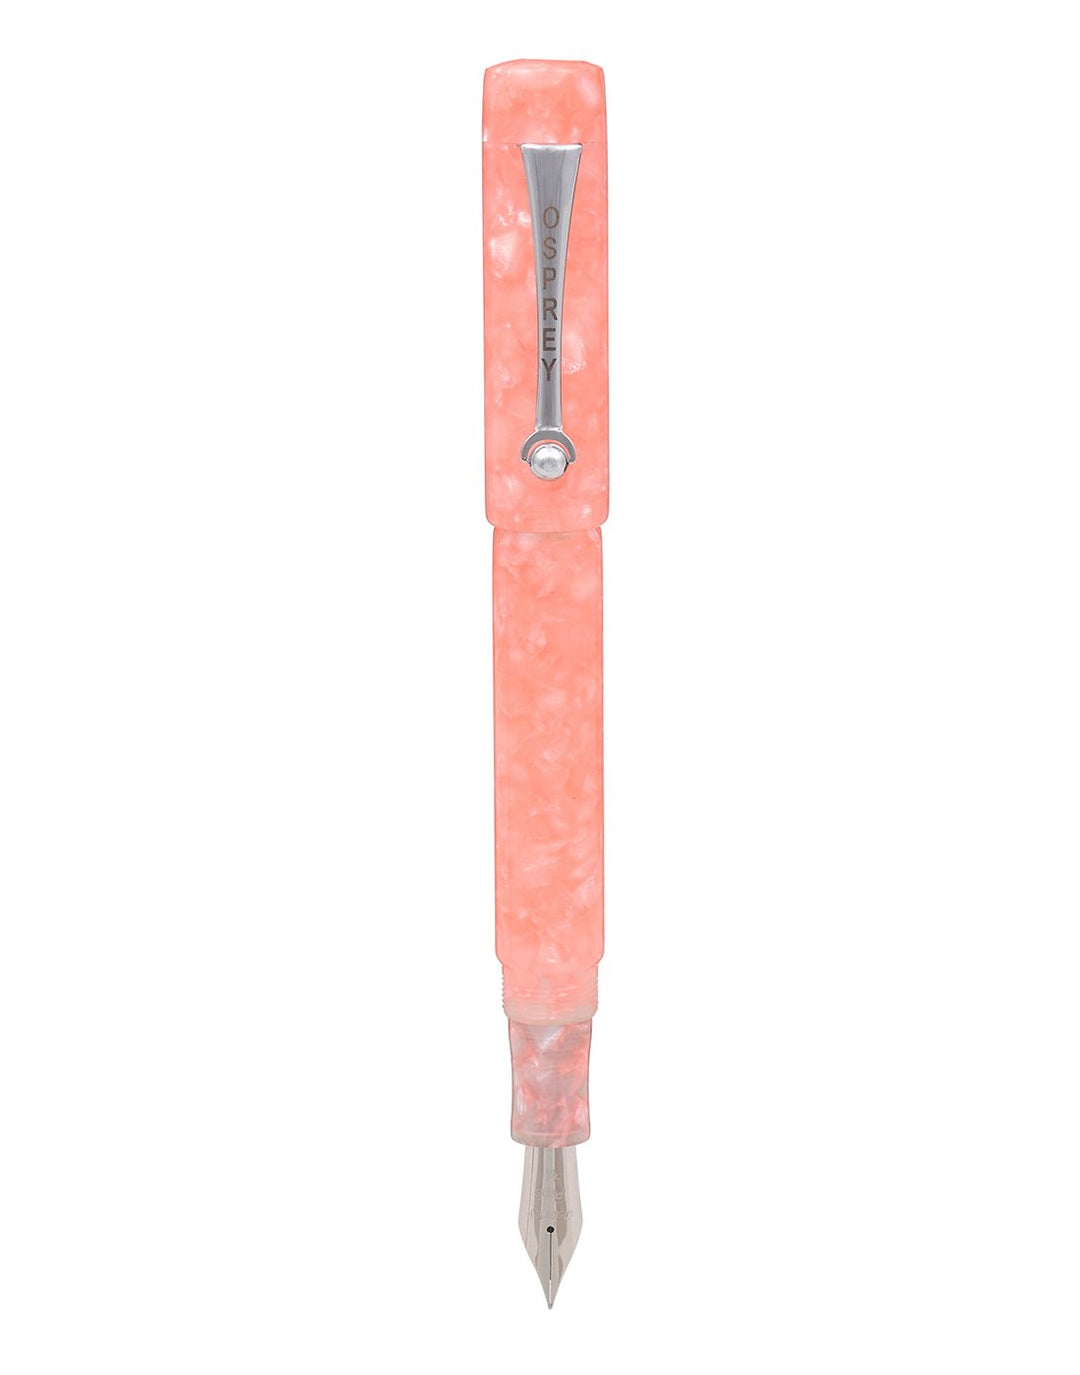 OSPREY PENS - MILANO Fountain Pen "Rose Quartz" With Standard And Flex Nib Options - Buchan's Kerrisdale Stationery